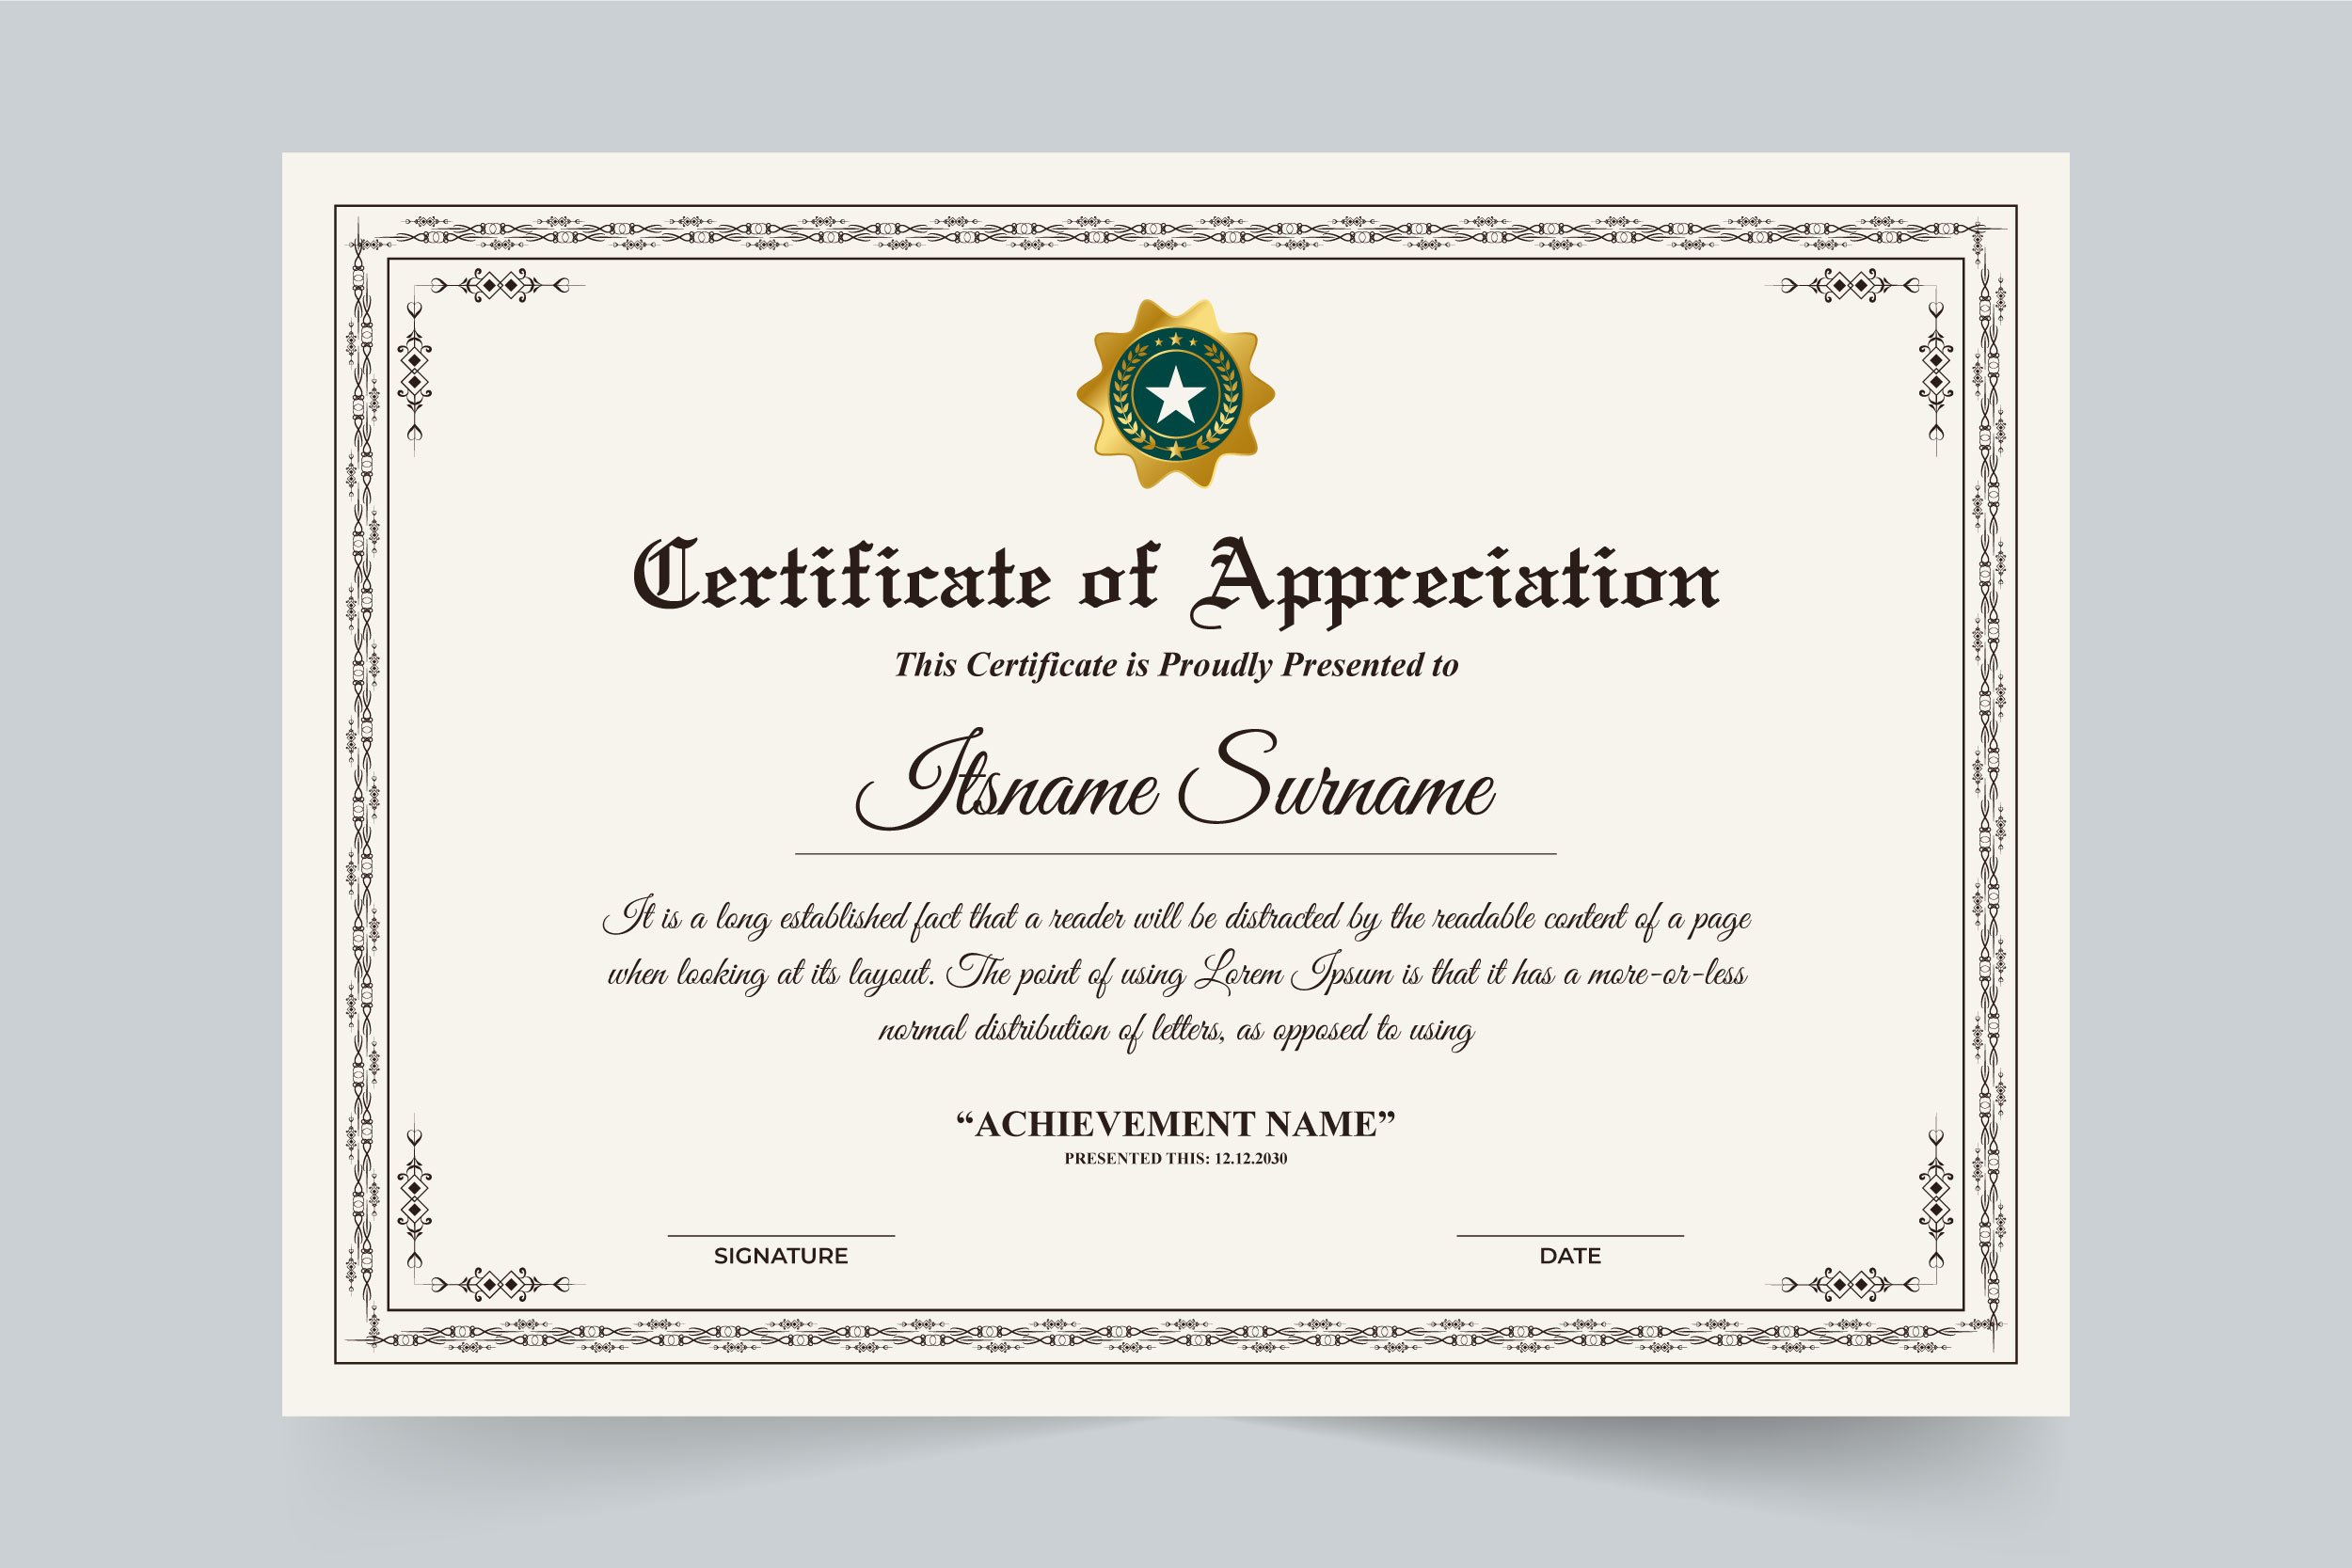 Achievement certificate template cover image.